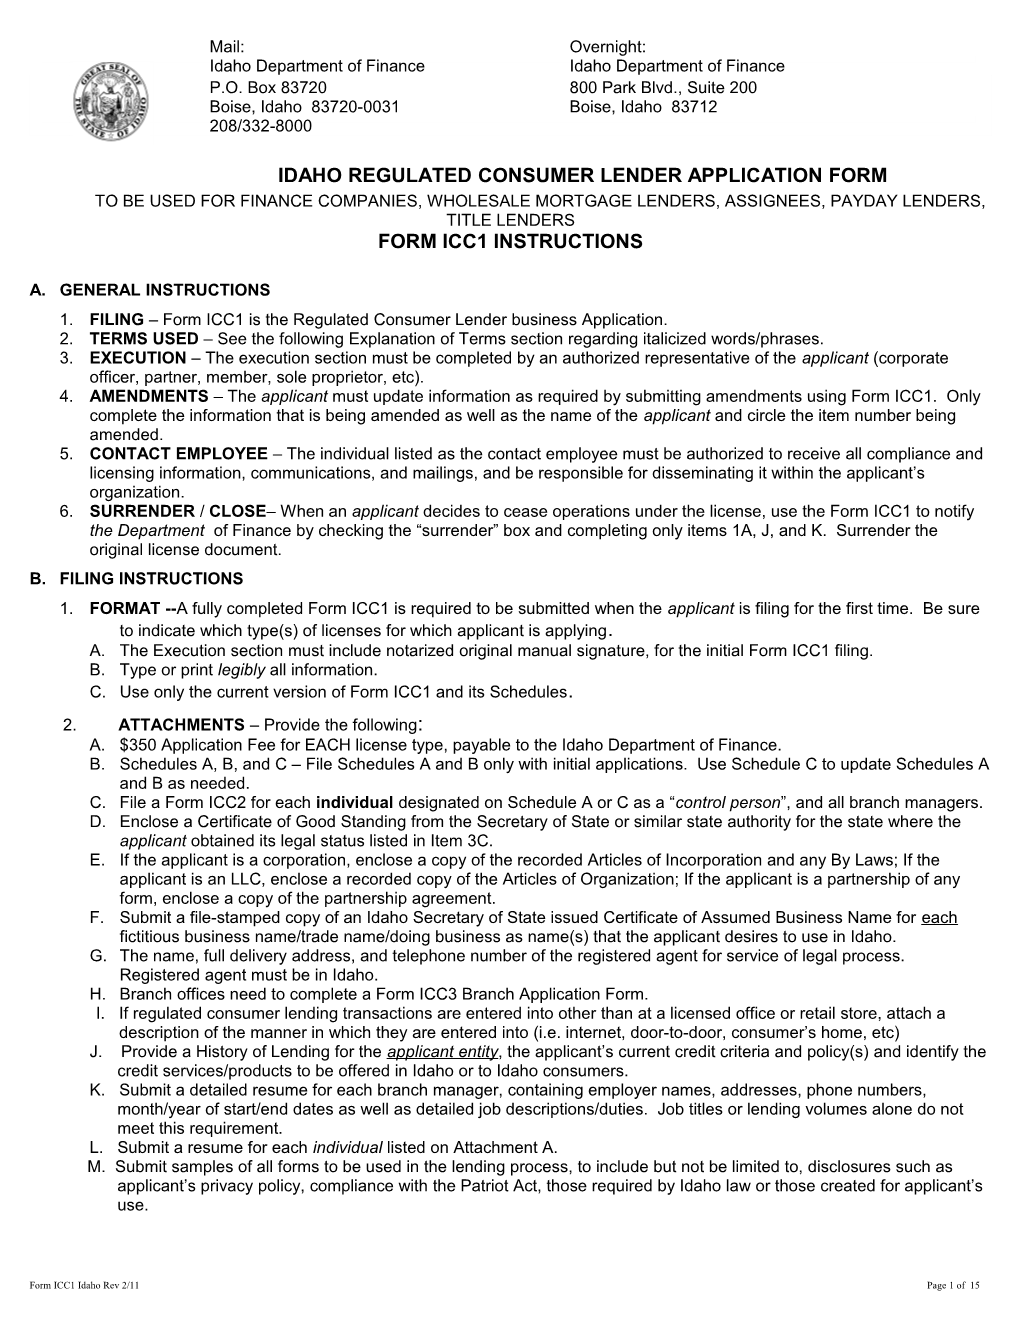 Idaho Regulated Consumer Lender Application Form